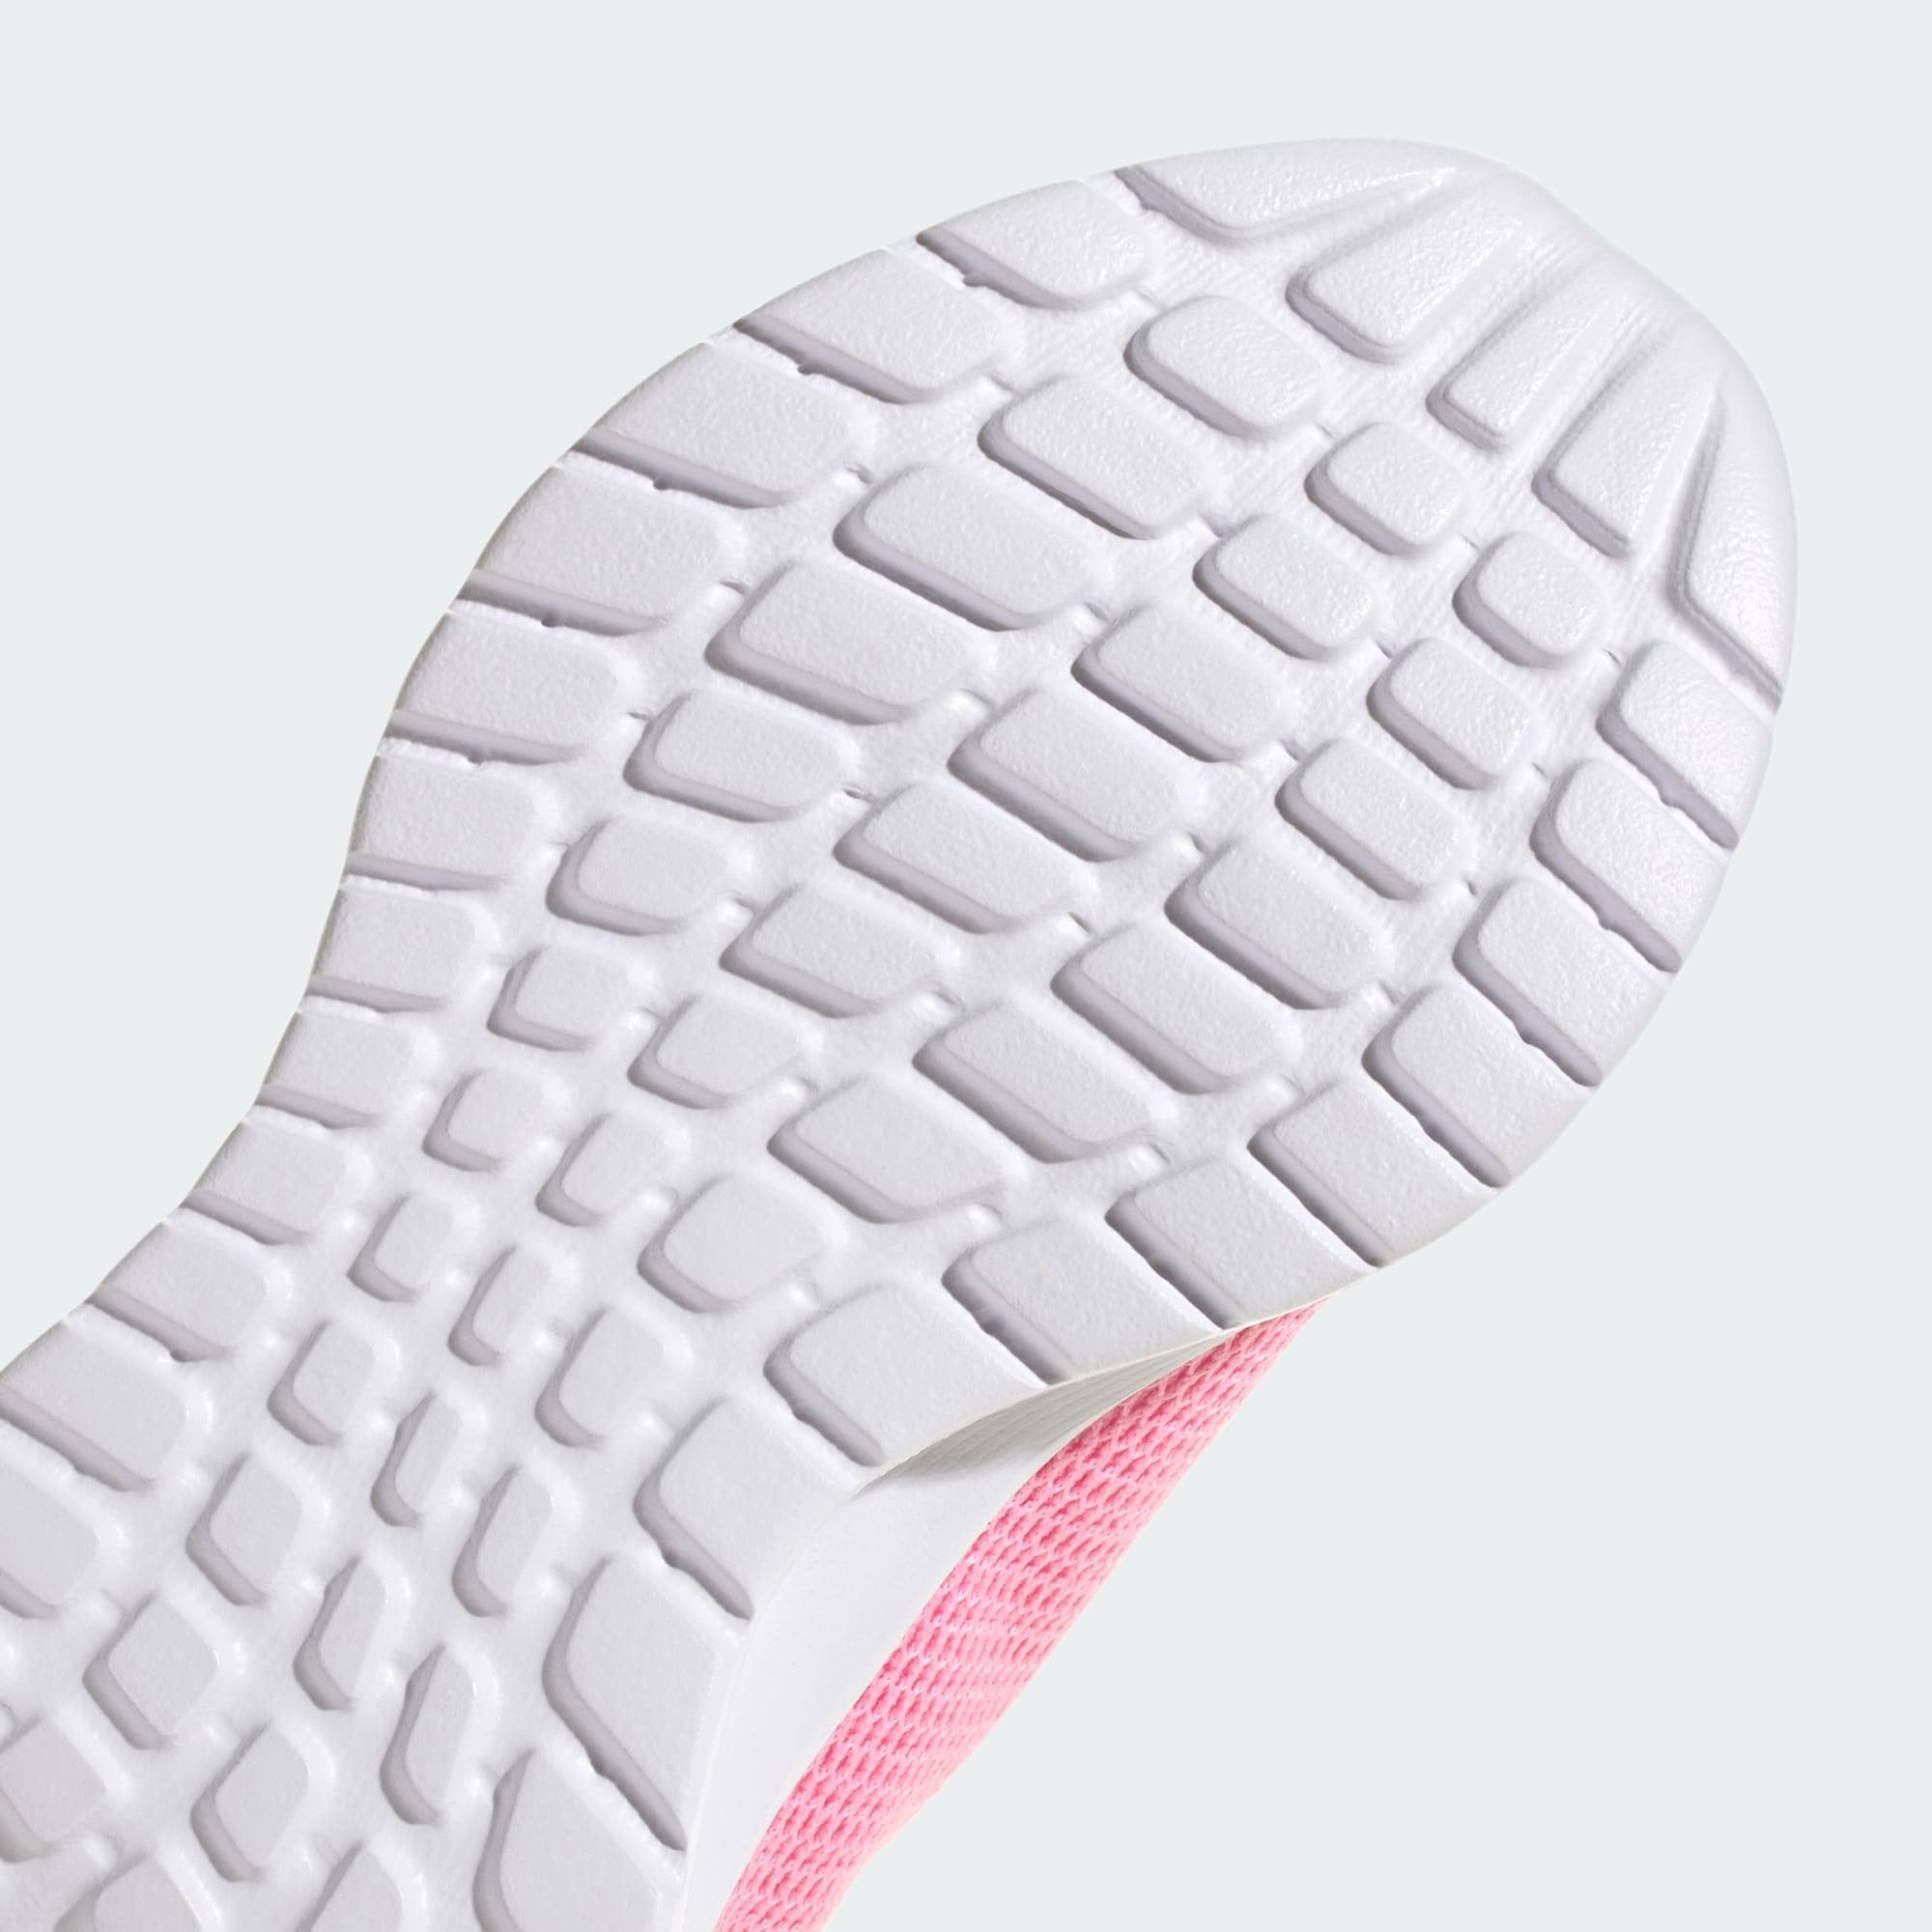 Hazy Orange Sportswear SCHUH / / White adidas Bliss Cloud Sneaker RUN Pink TENSAUR